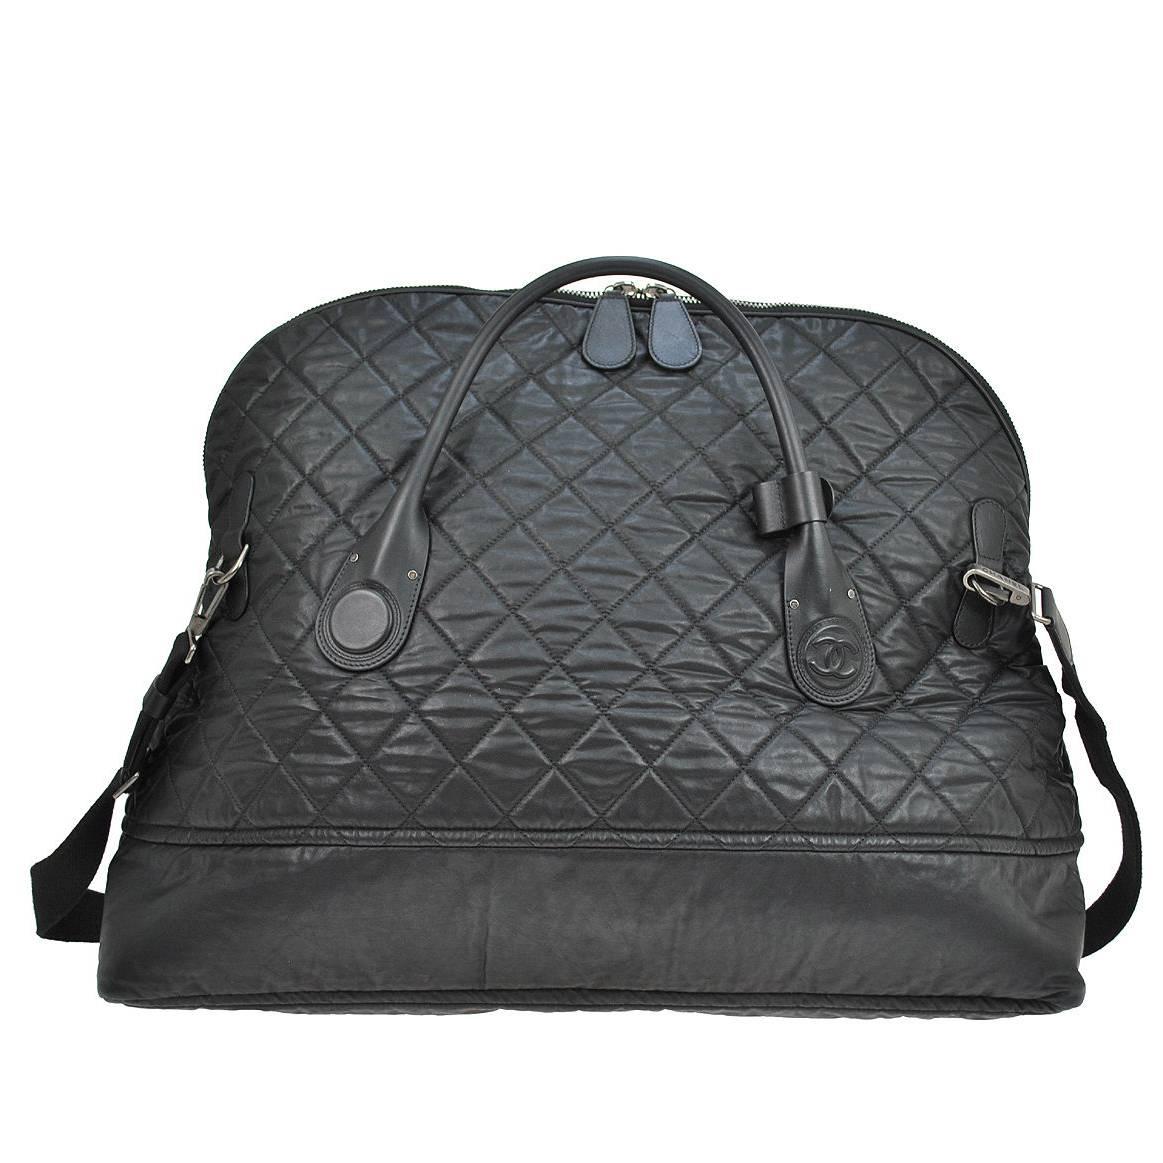 Chanel Black Large Unisex Weekender CarryAll Travel Shoulder Bag W. Accessories